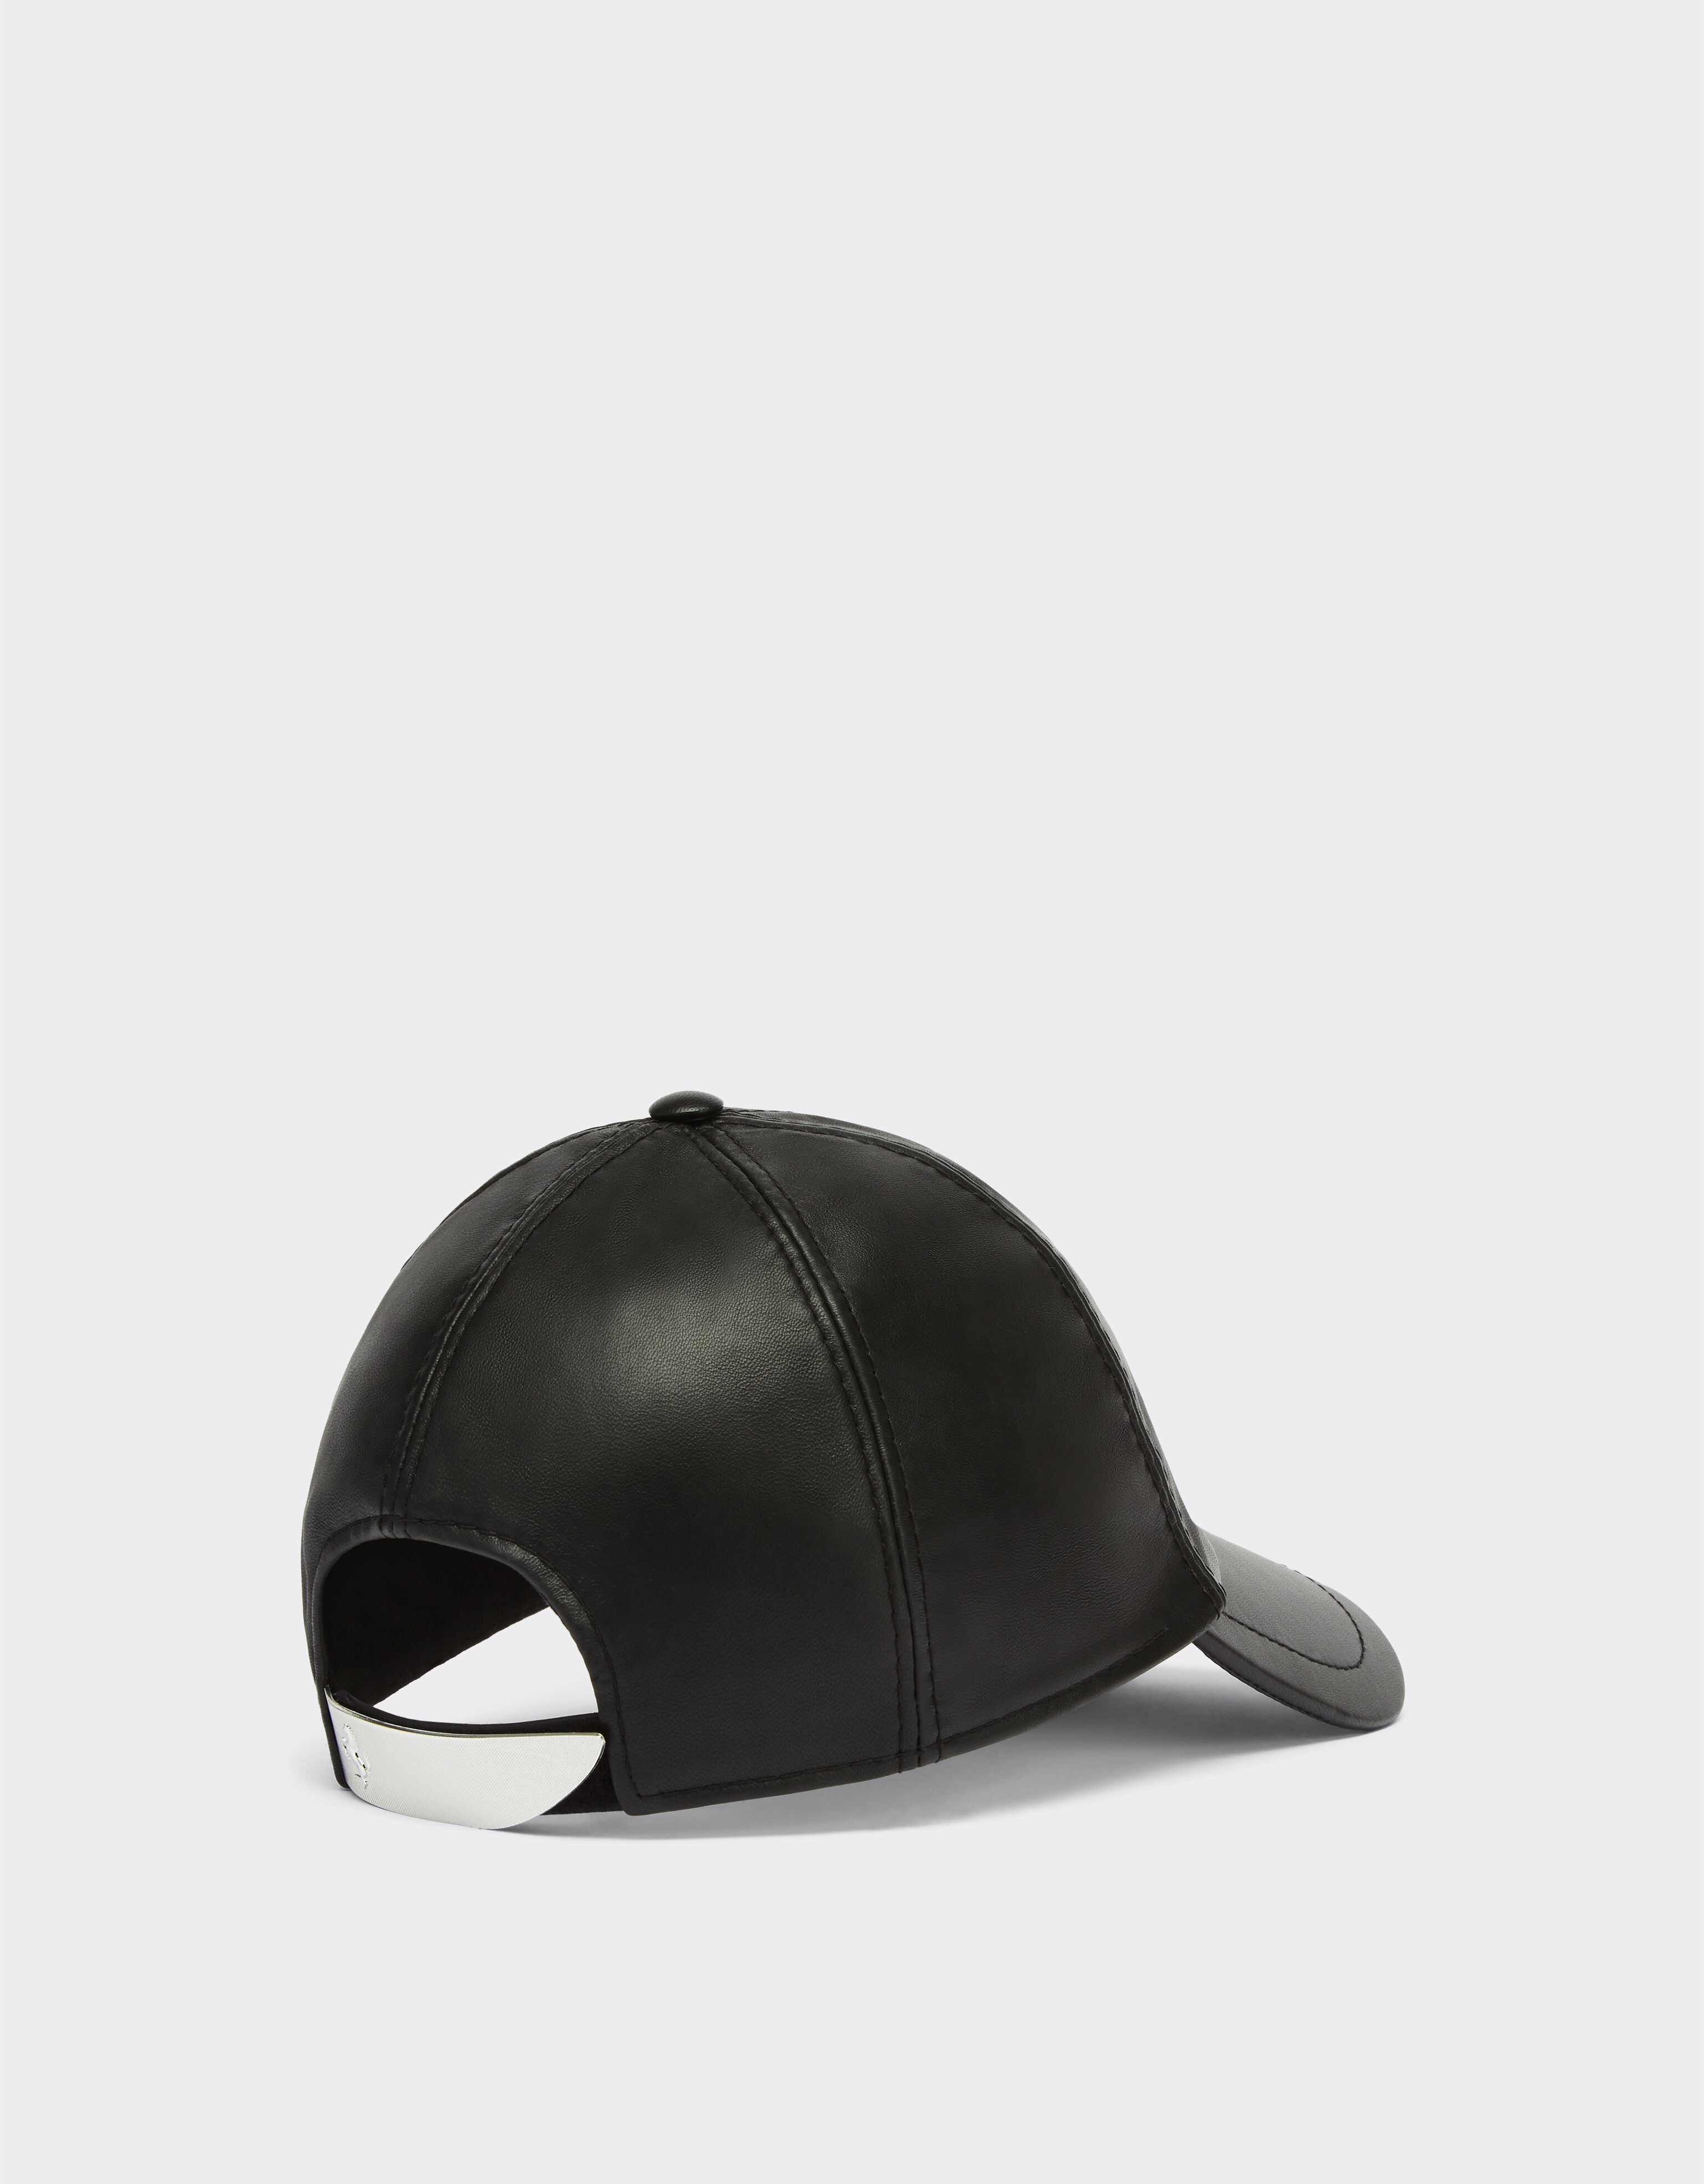 Ferrari Baseball cap with Prancing Horse logo Black 20264f